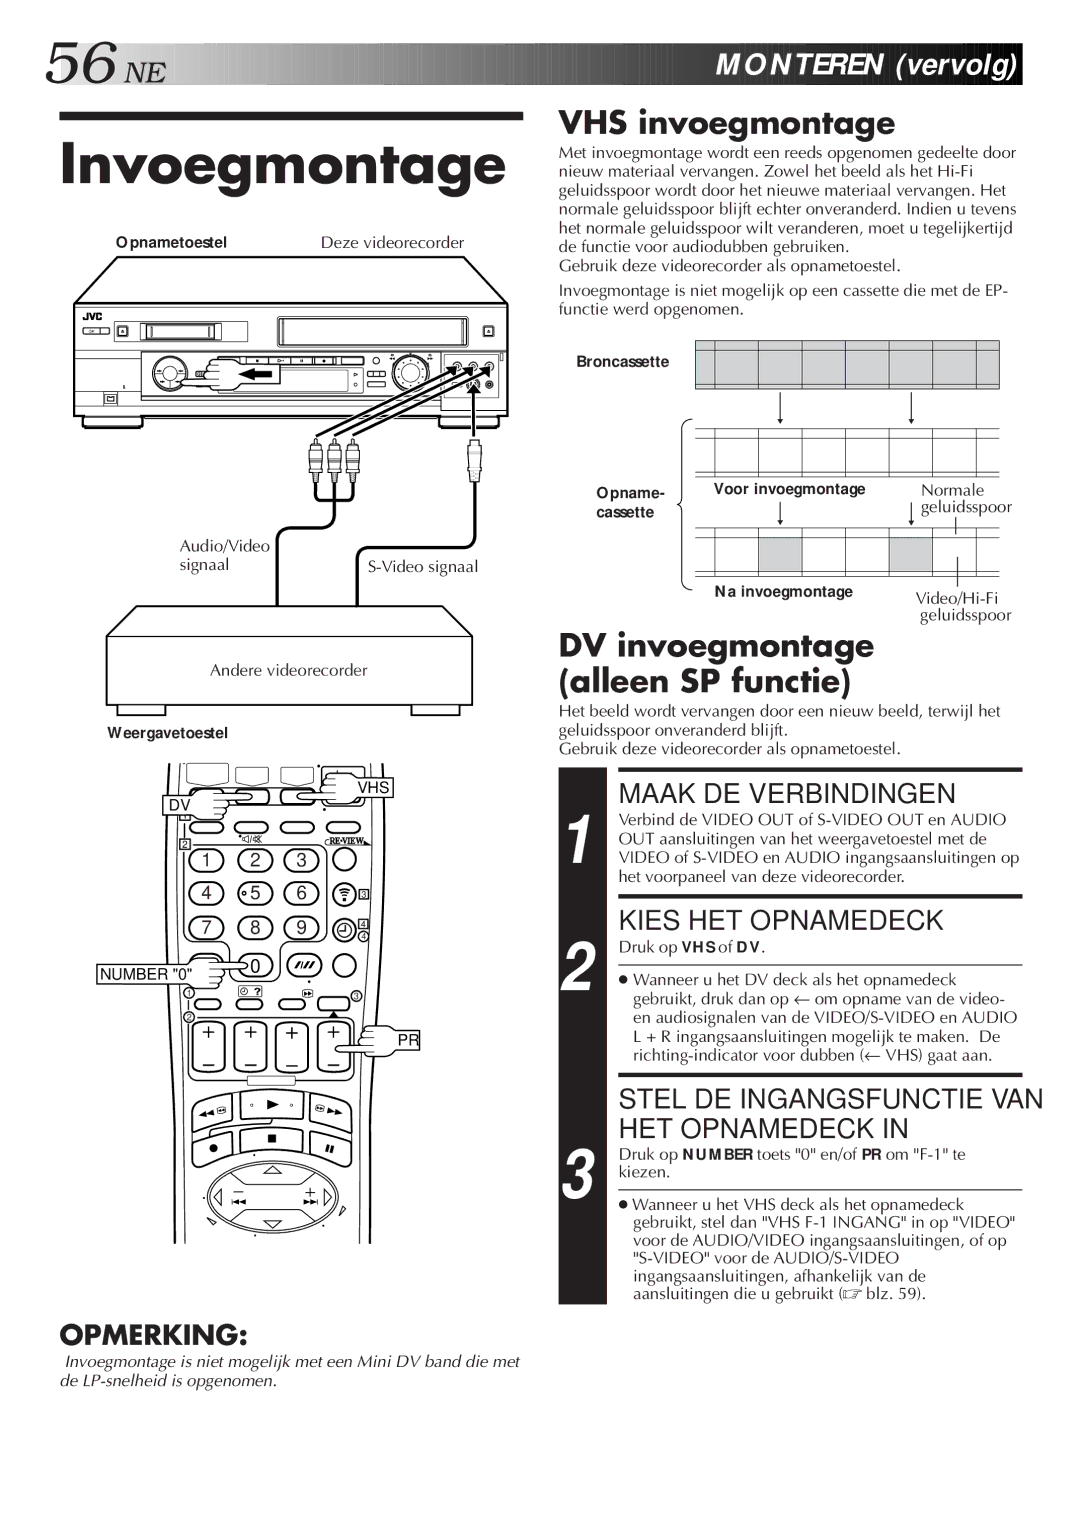 JVC HR-DVS2EU manual Invoegmontage, VHS invoegmontage, DV invoegmontage alleen SP functie 